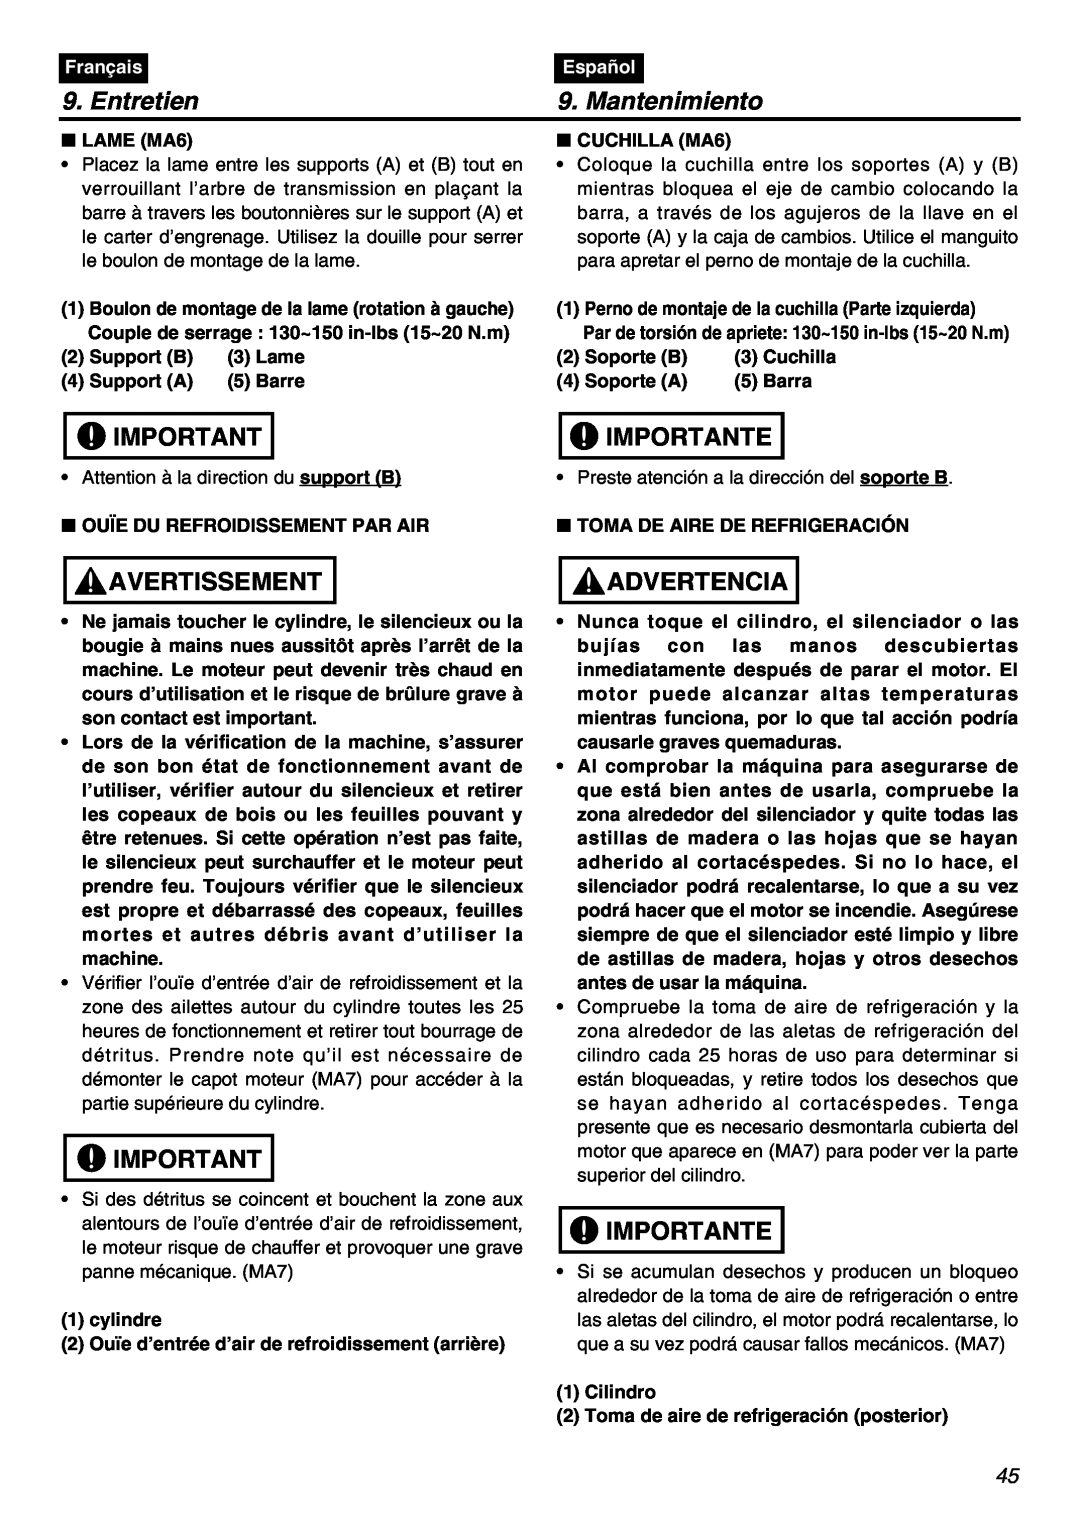 RedMax HEZ3001S manual LAME MA6, CUCHILLA MA6, Entretien, Mantenimiento, Avertissement, Importante, Advertencia, Français 